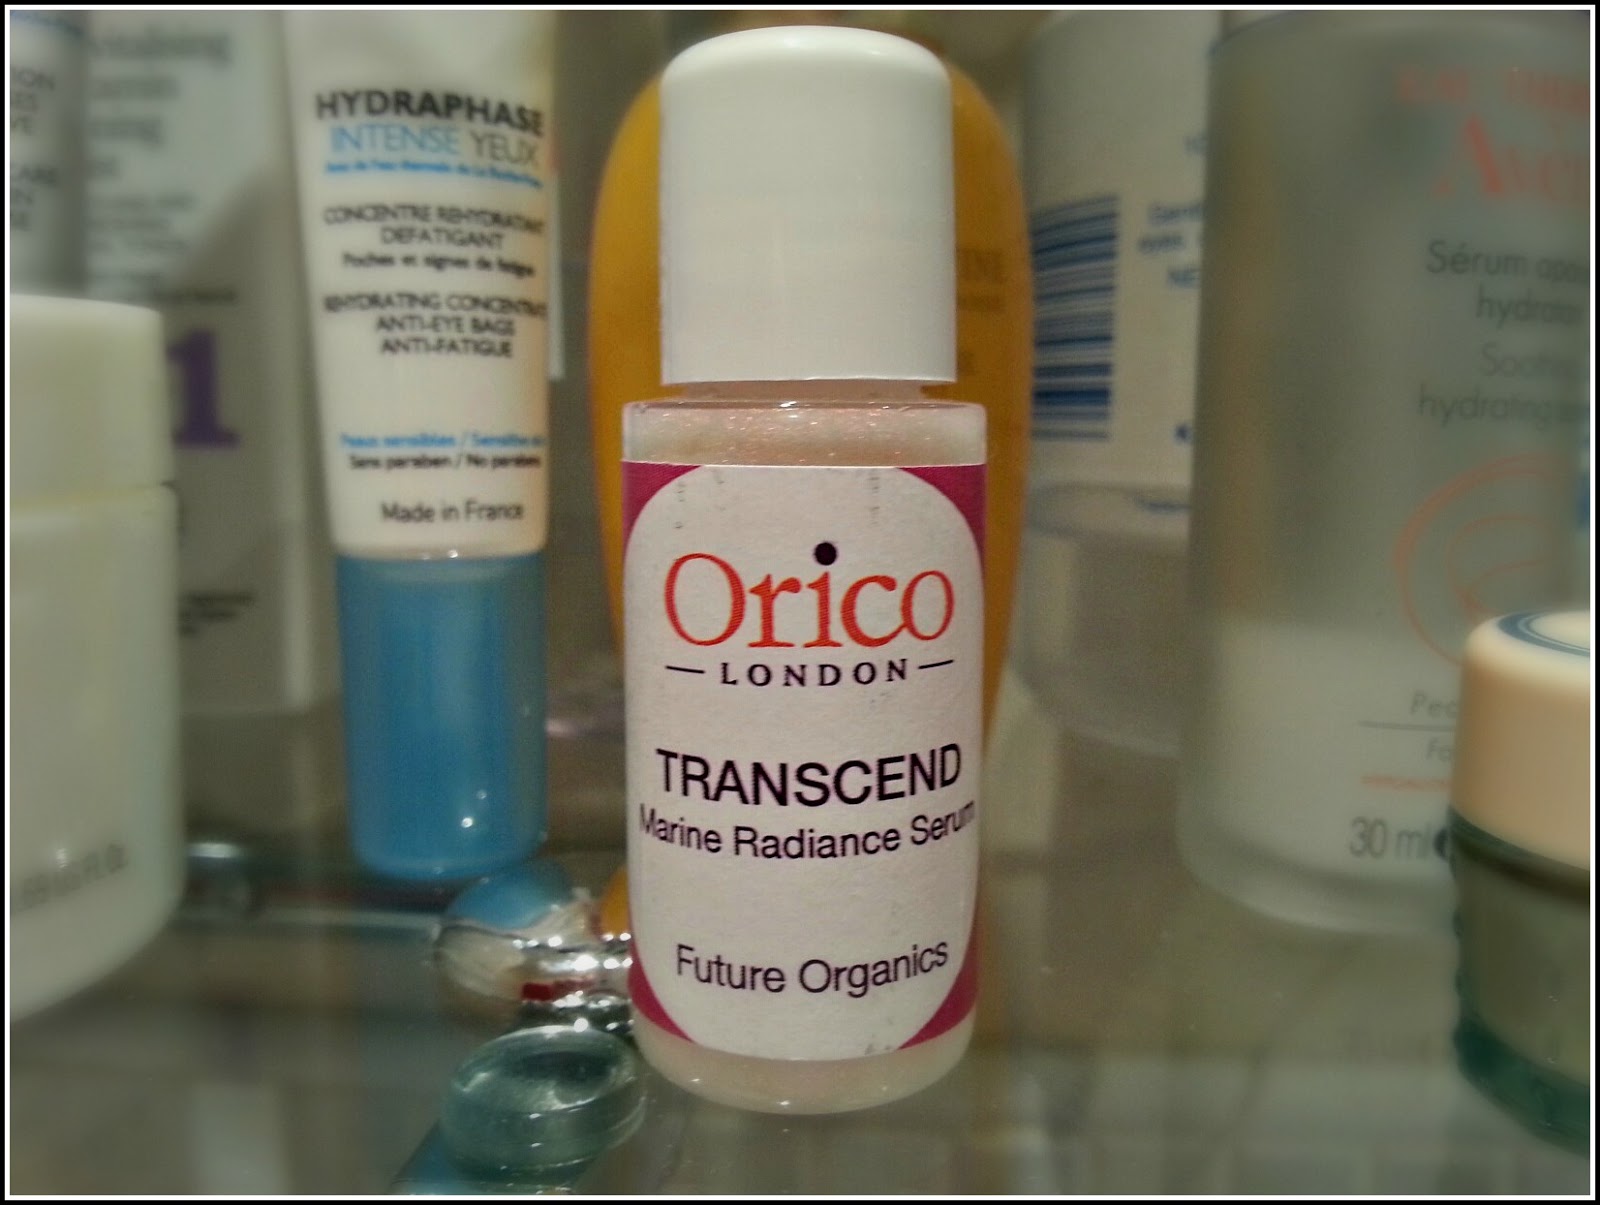 Orico London Transcend Marine radiance Serum